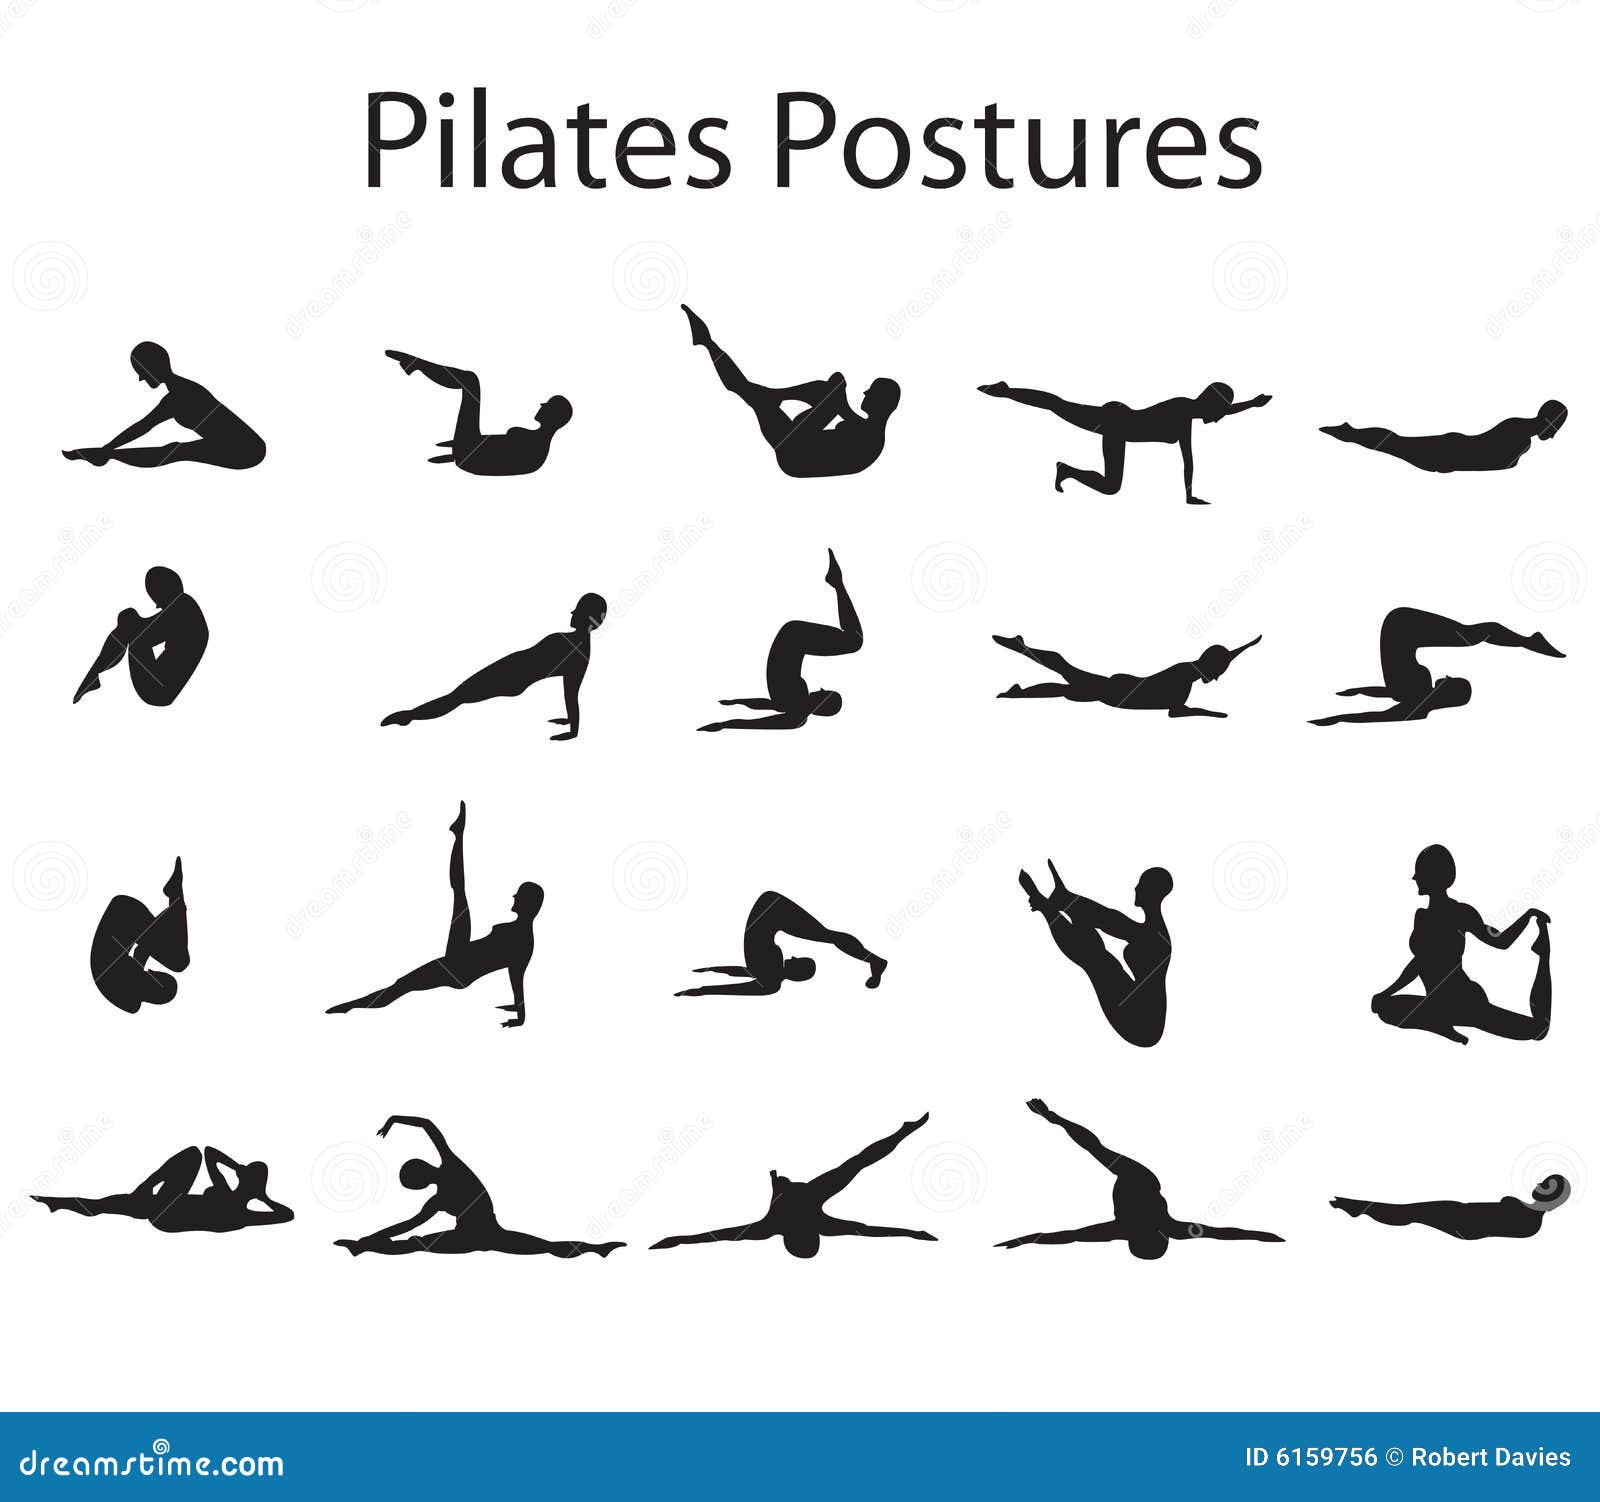 https://thumbs.dreamstime.com/z/pilates-postures-positions-6159756.jpg